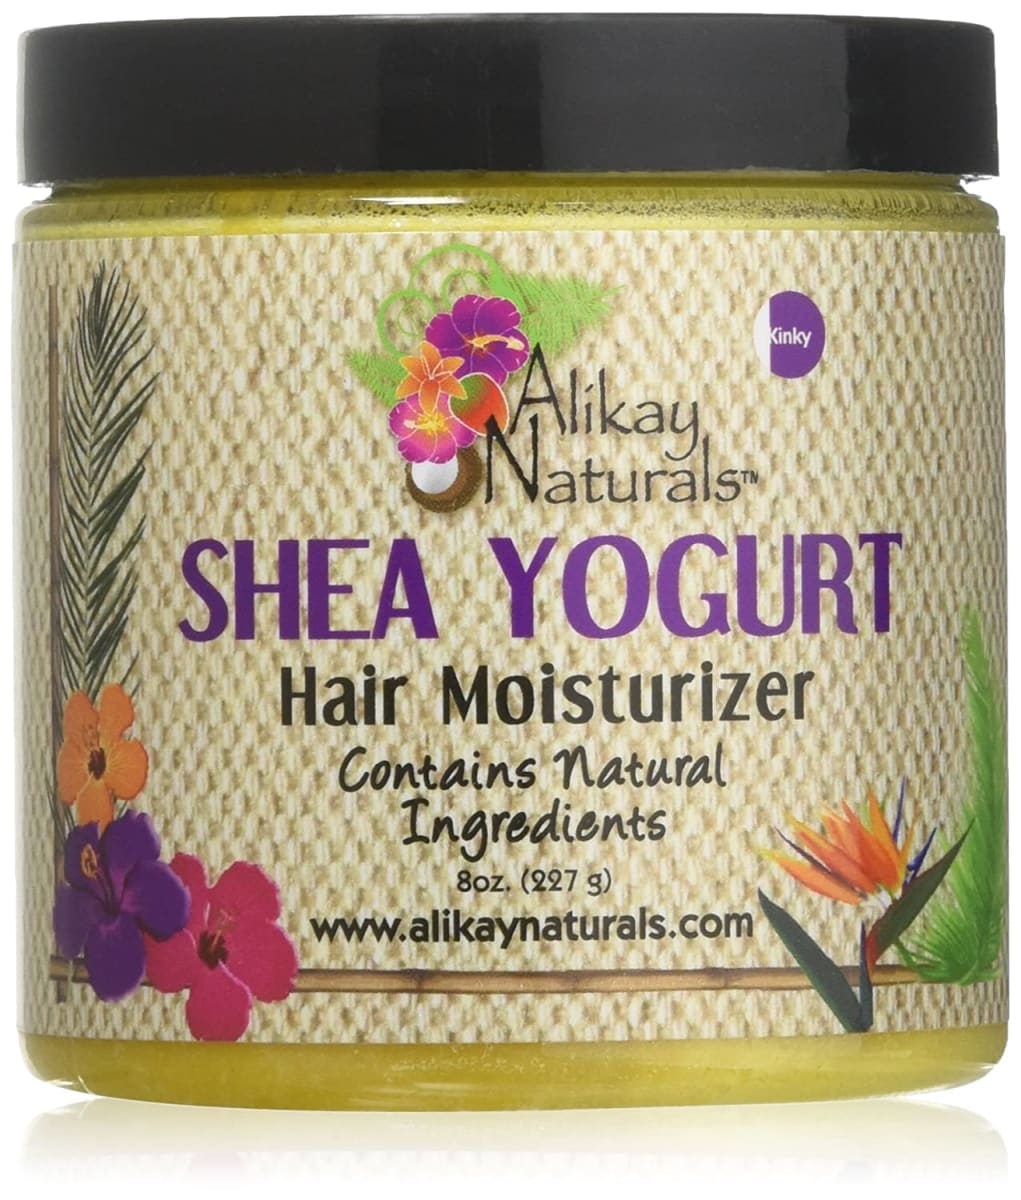 Alikay Naturals Shea Yogurt Hair Moisturizer Natural Raw Shea Butter